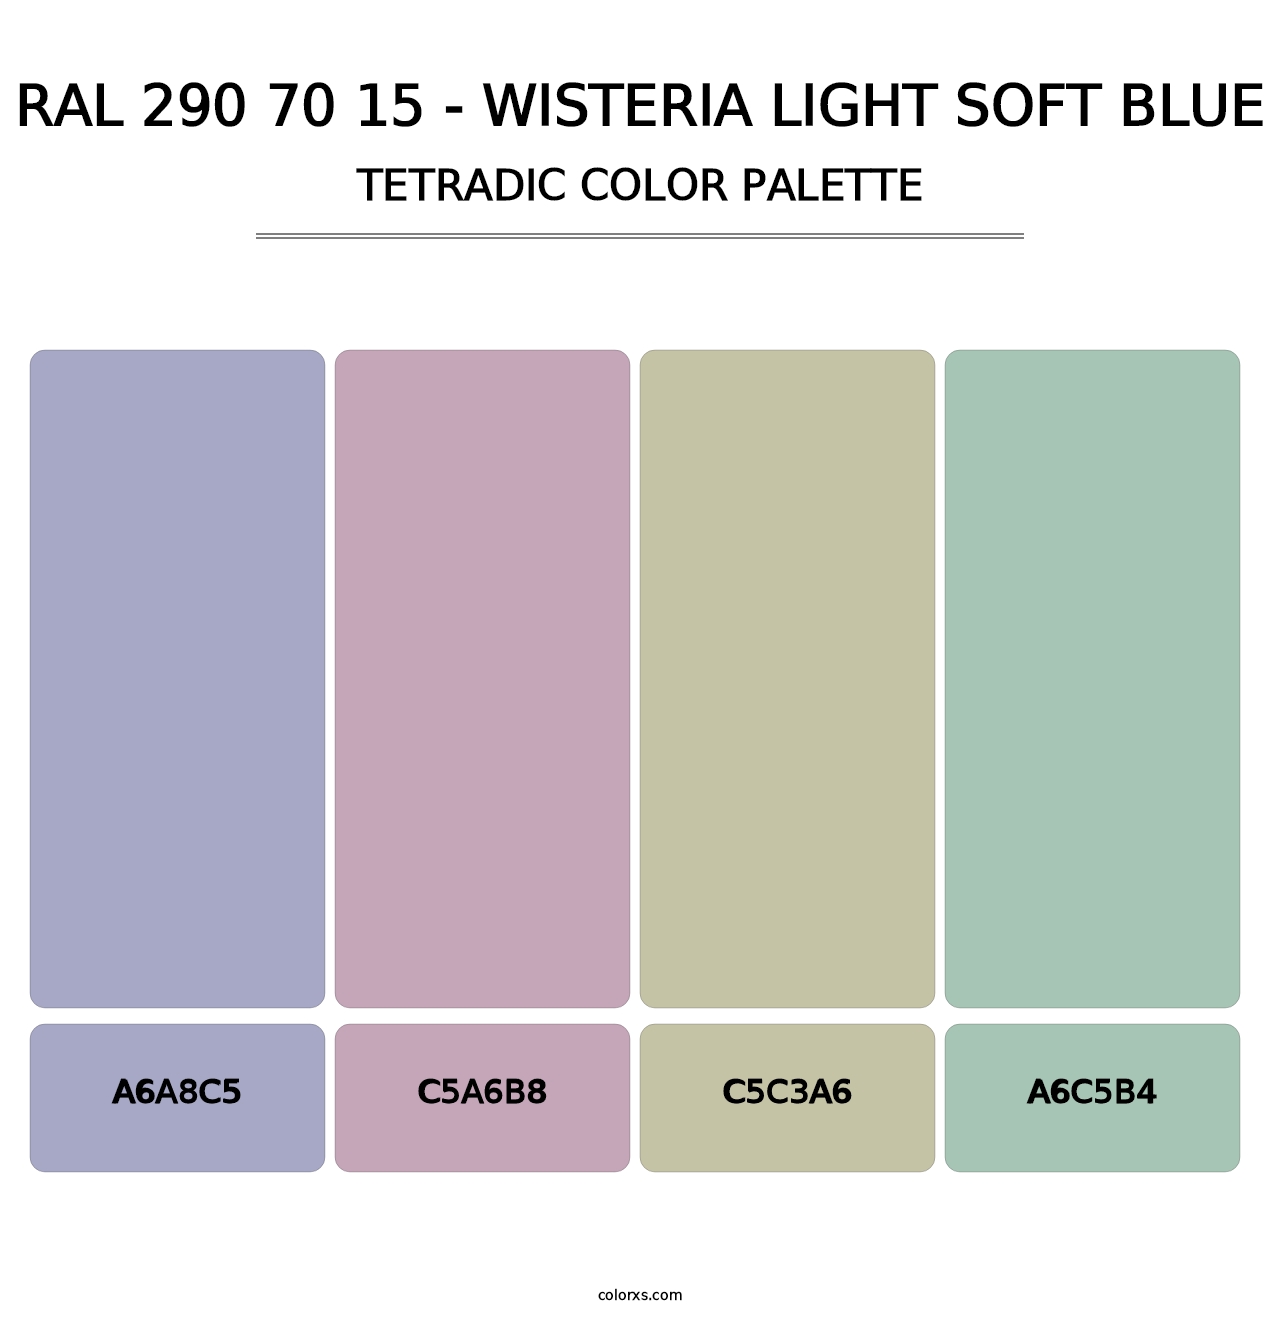 RAL 290 70 15 - Wisteria Light Soft Blue - Tetradic Color Palette